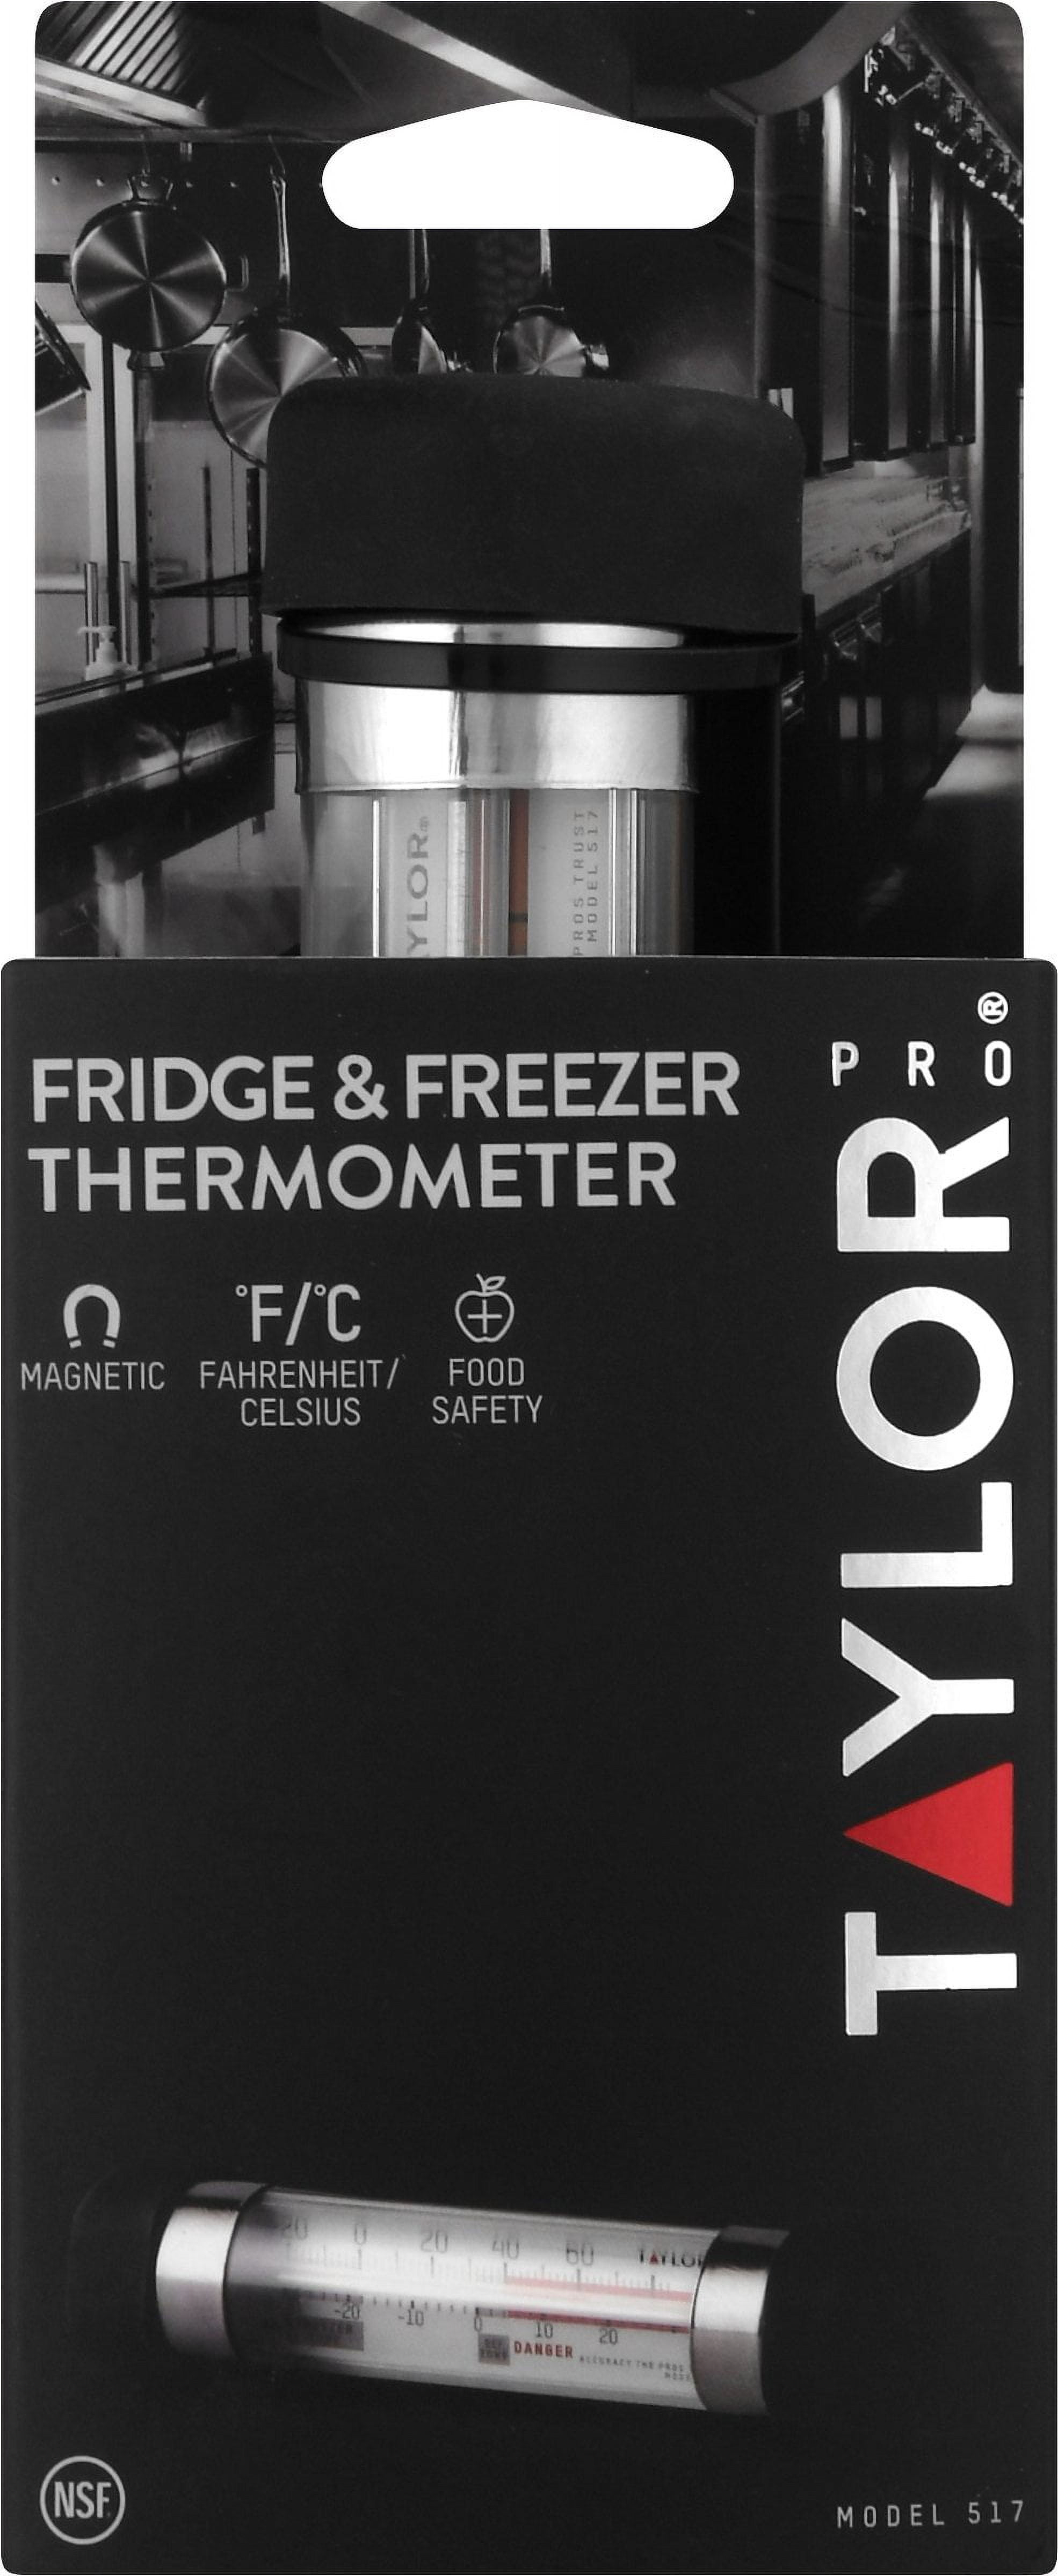 Taylor Refrigerator/Freezer Tube Thermometer - Bunzl Processor Division